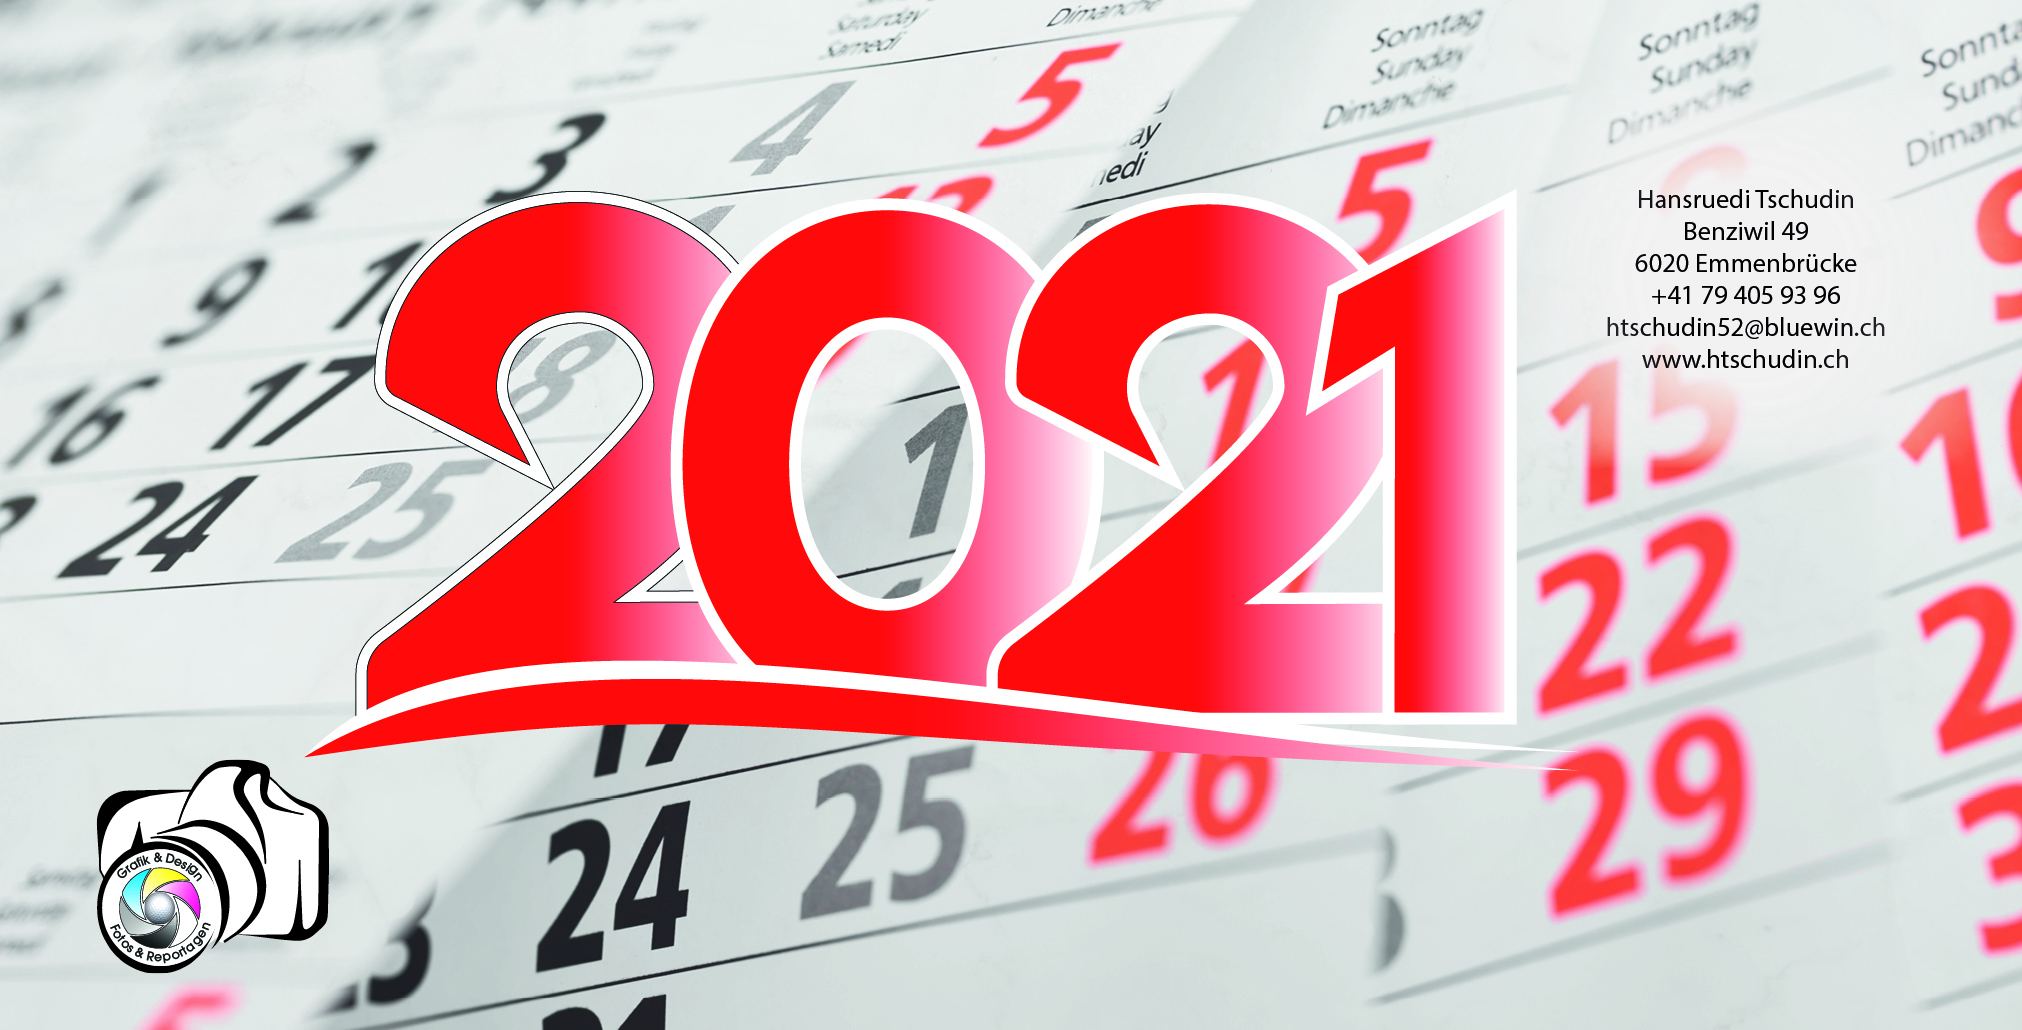 Kalender 2021